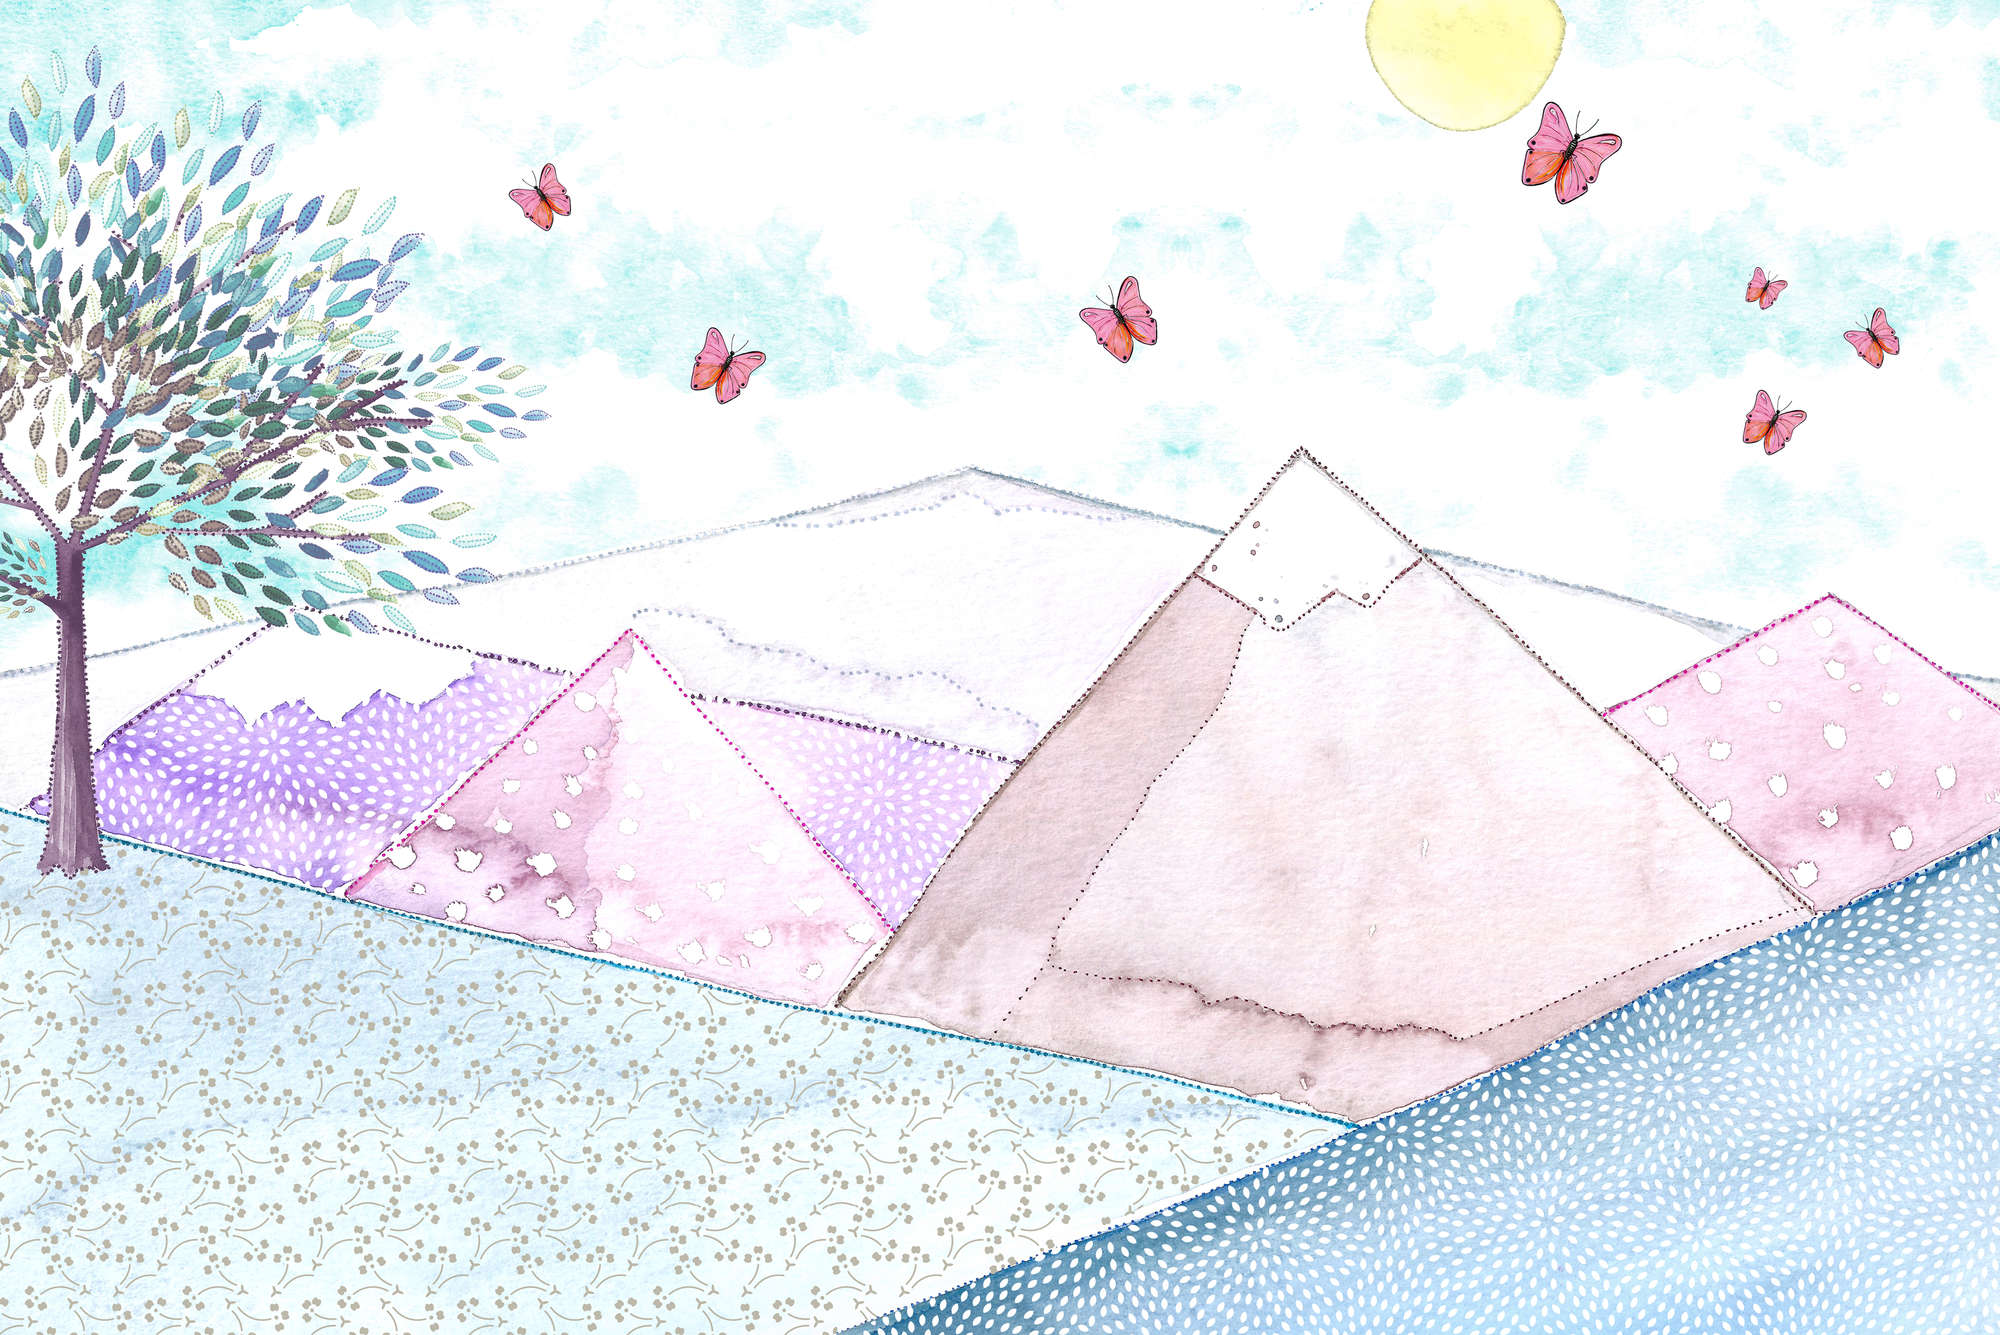             Children mural mountain landscape drawing on matt smooth nonwoven
        